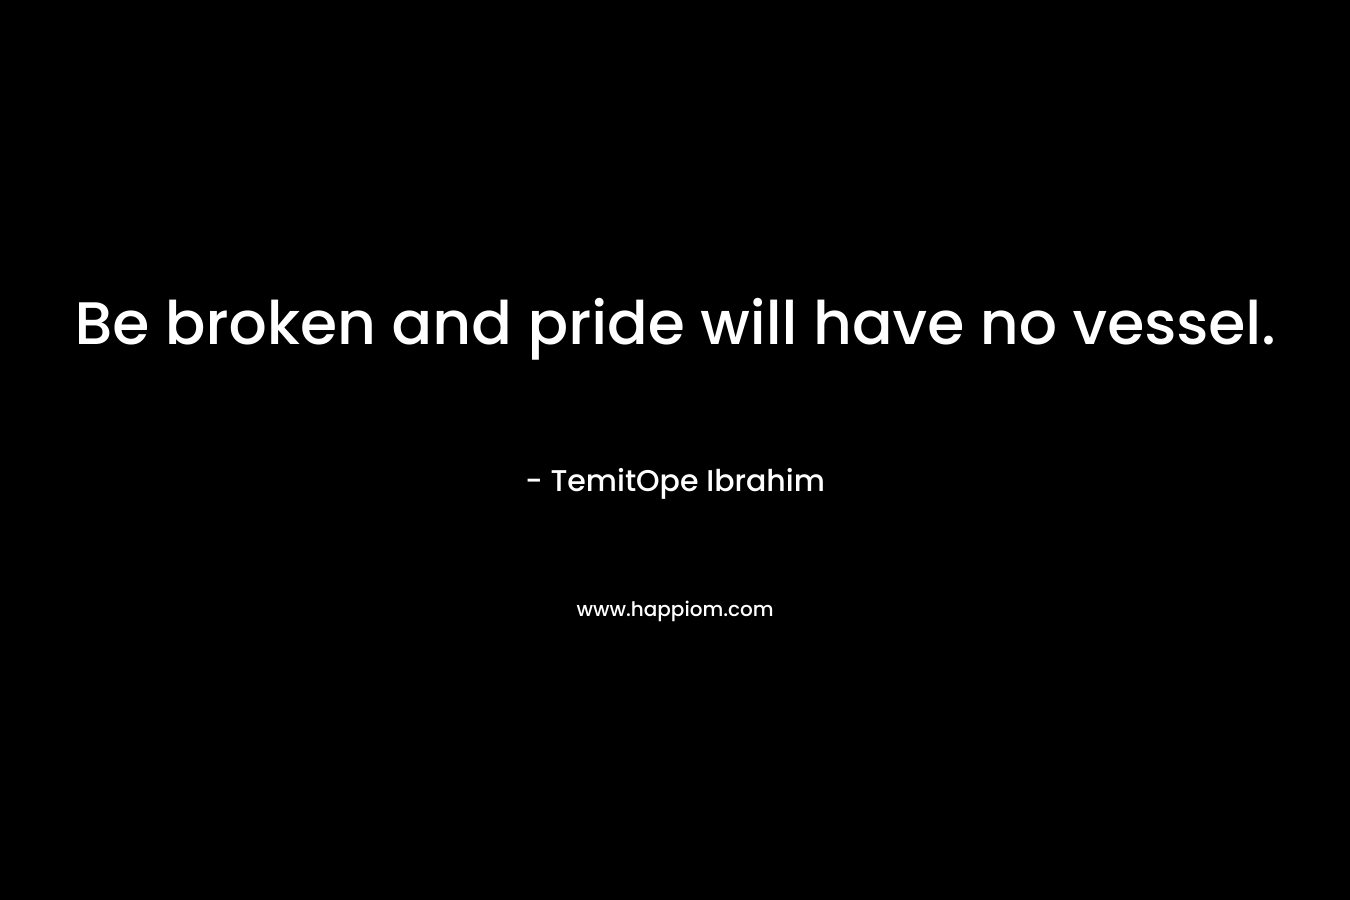 Be broken and pride will have no vessel.